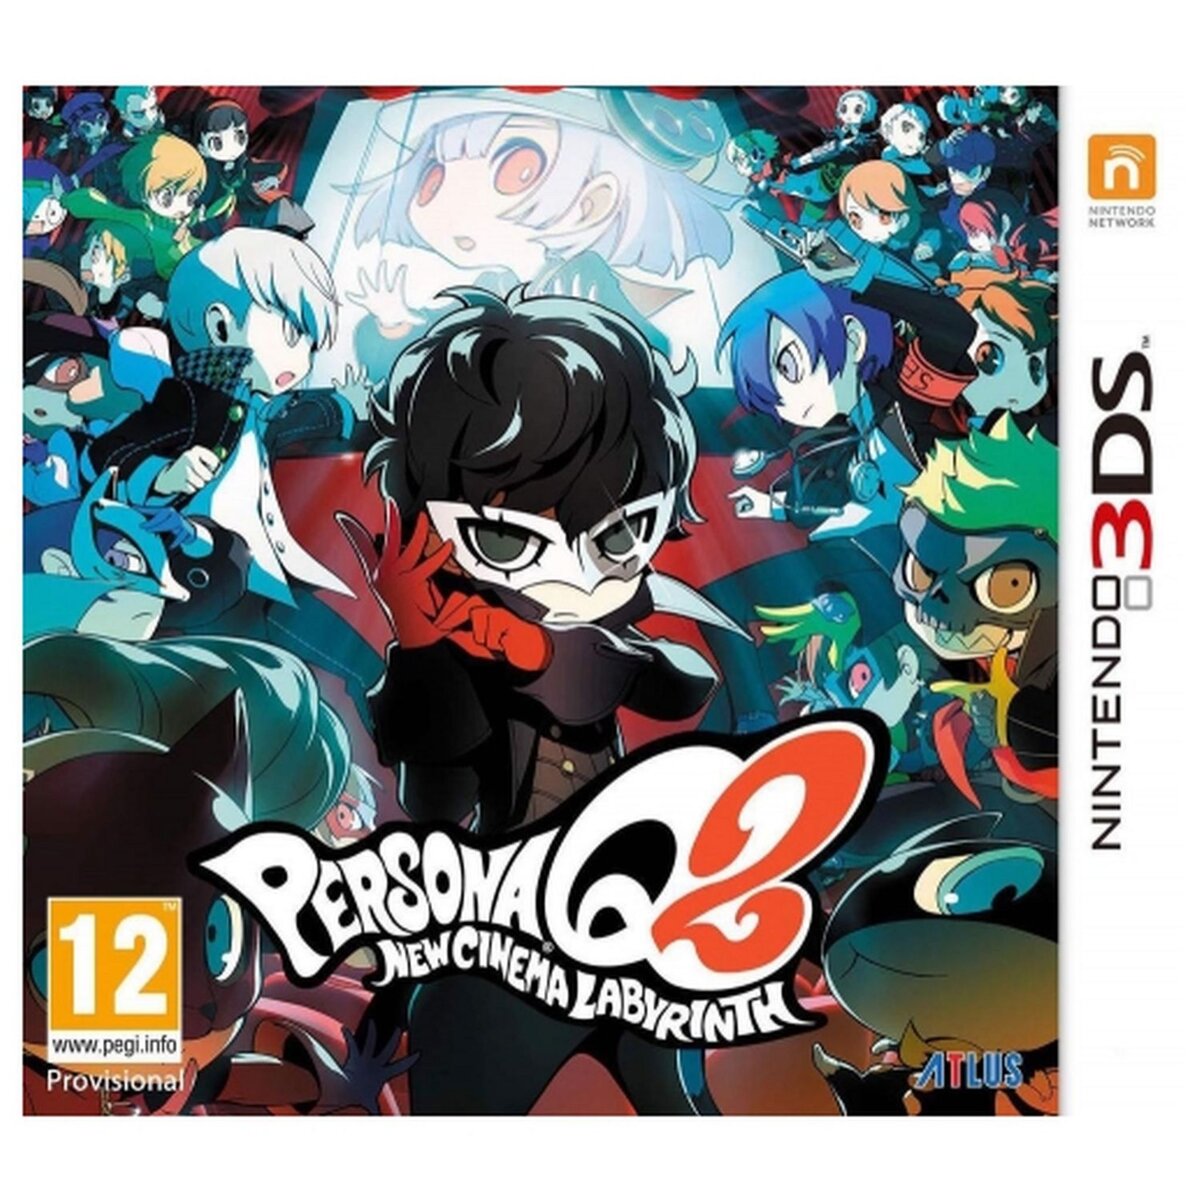 Persona Q2 : New Cinema Labyrinth 3DS